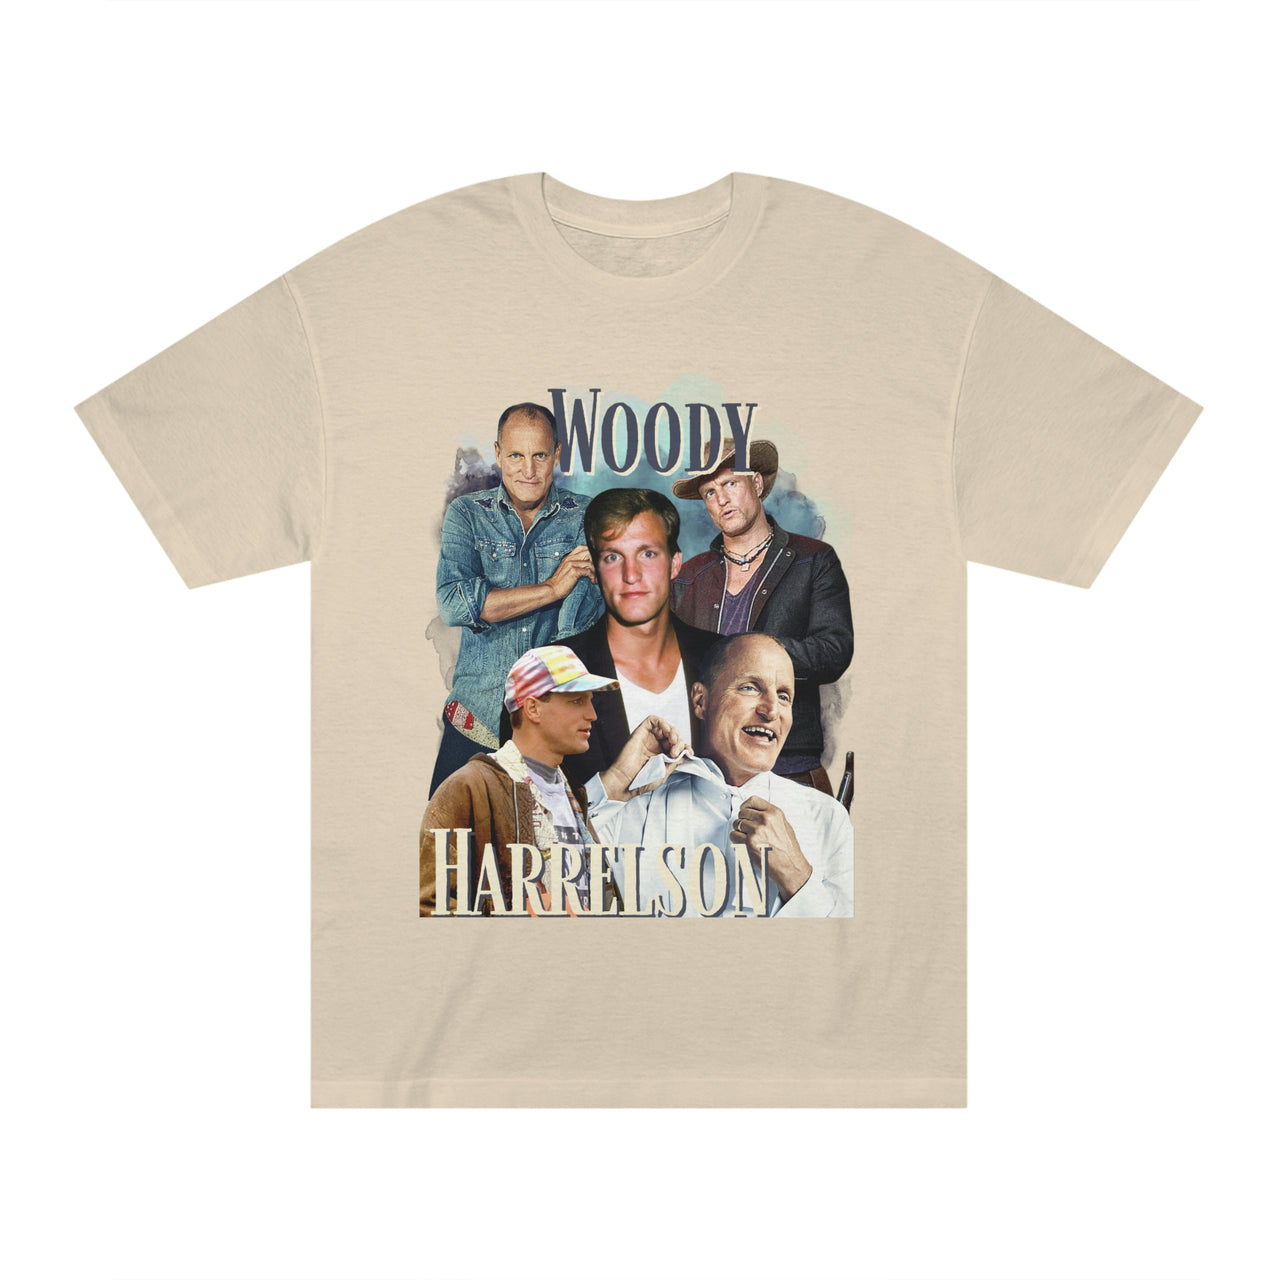 Woody Harrelson Shirt, Bootleg Shirt Vintage Style Zombieland Fan Gift TShirt, Triangle of Sadness Fan Tee